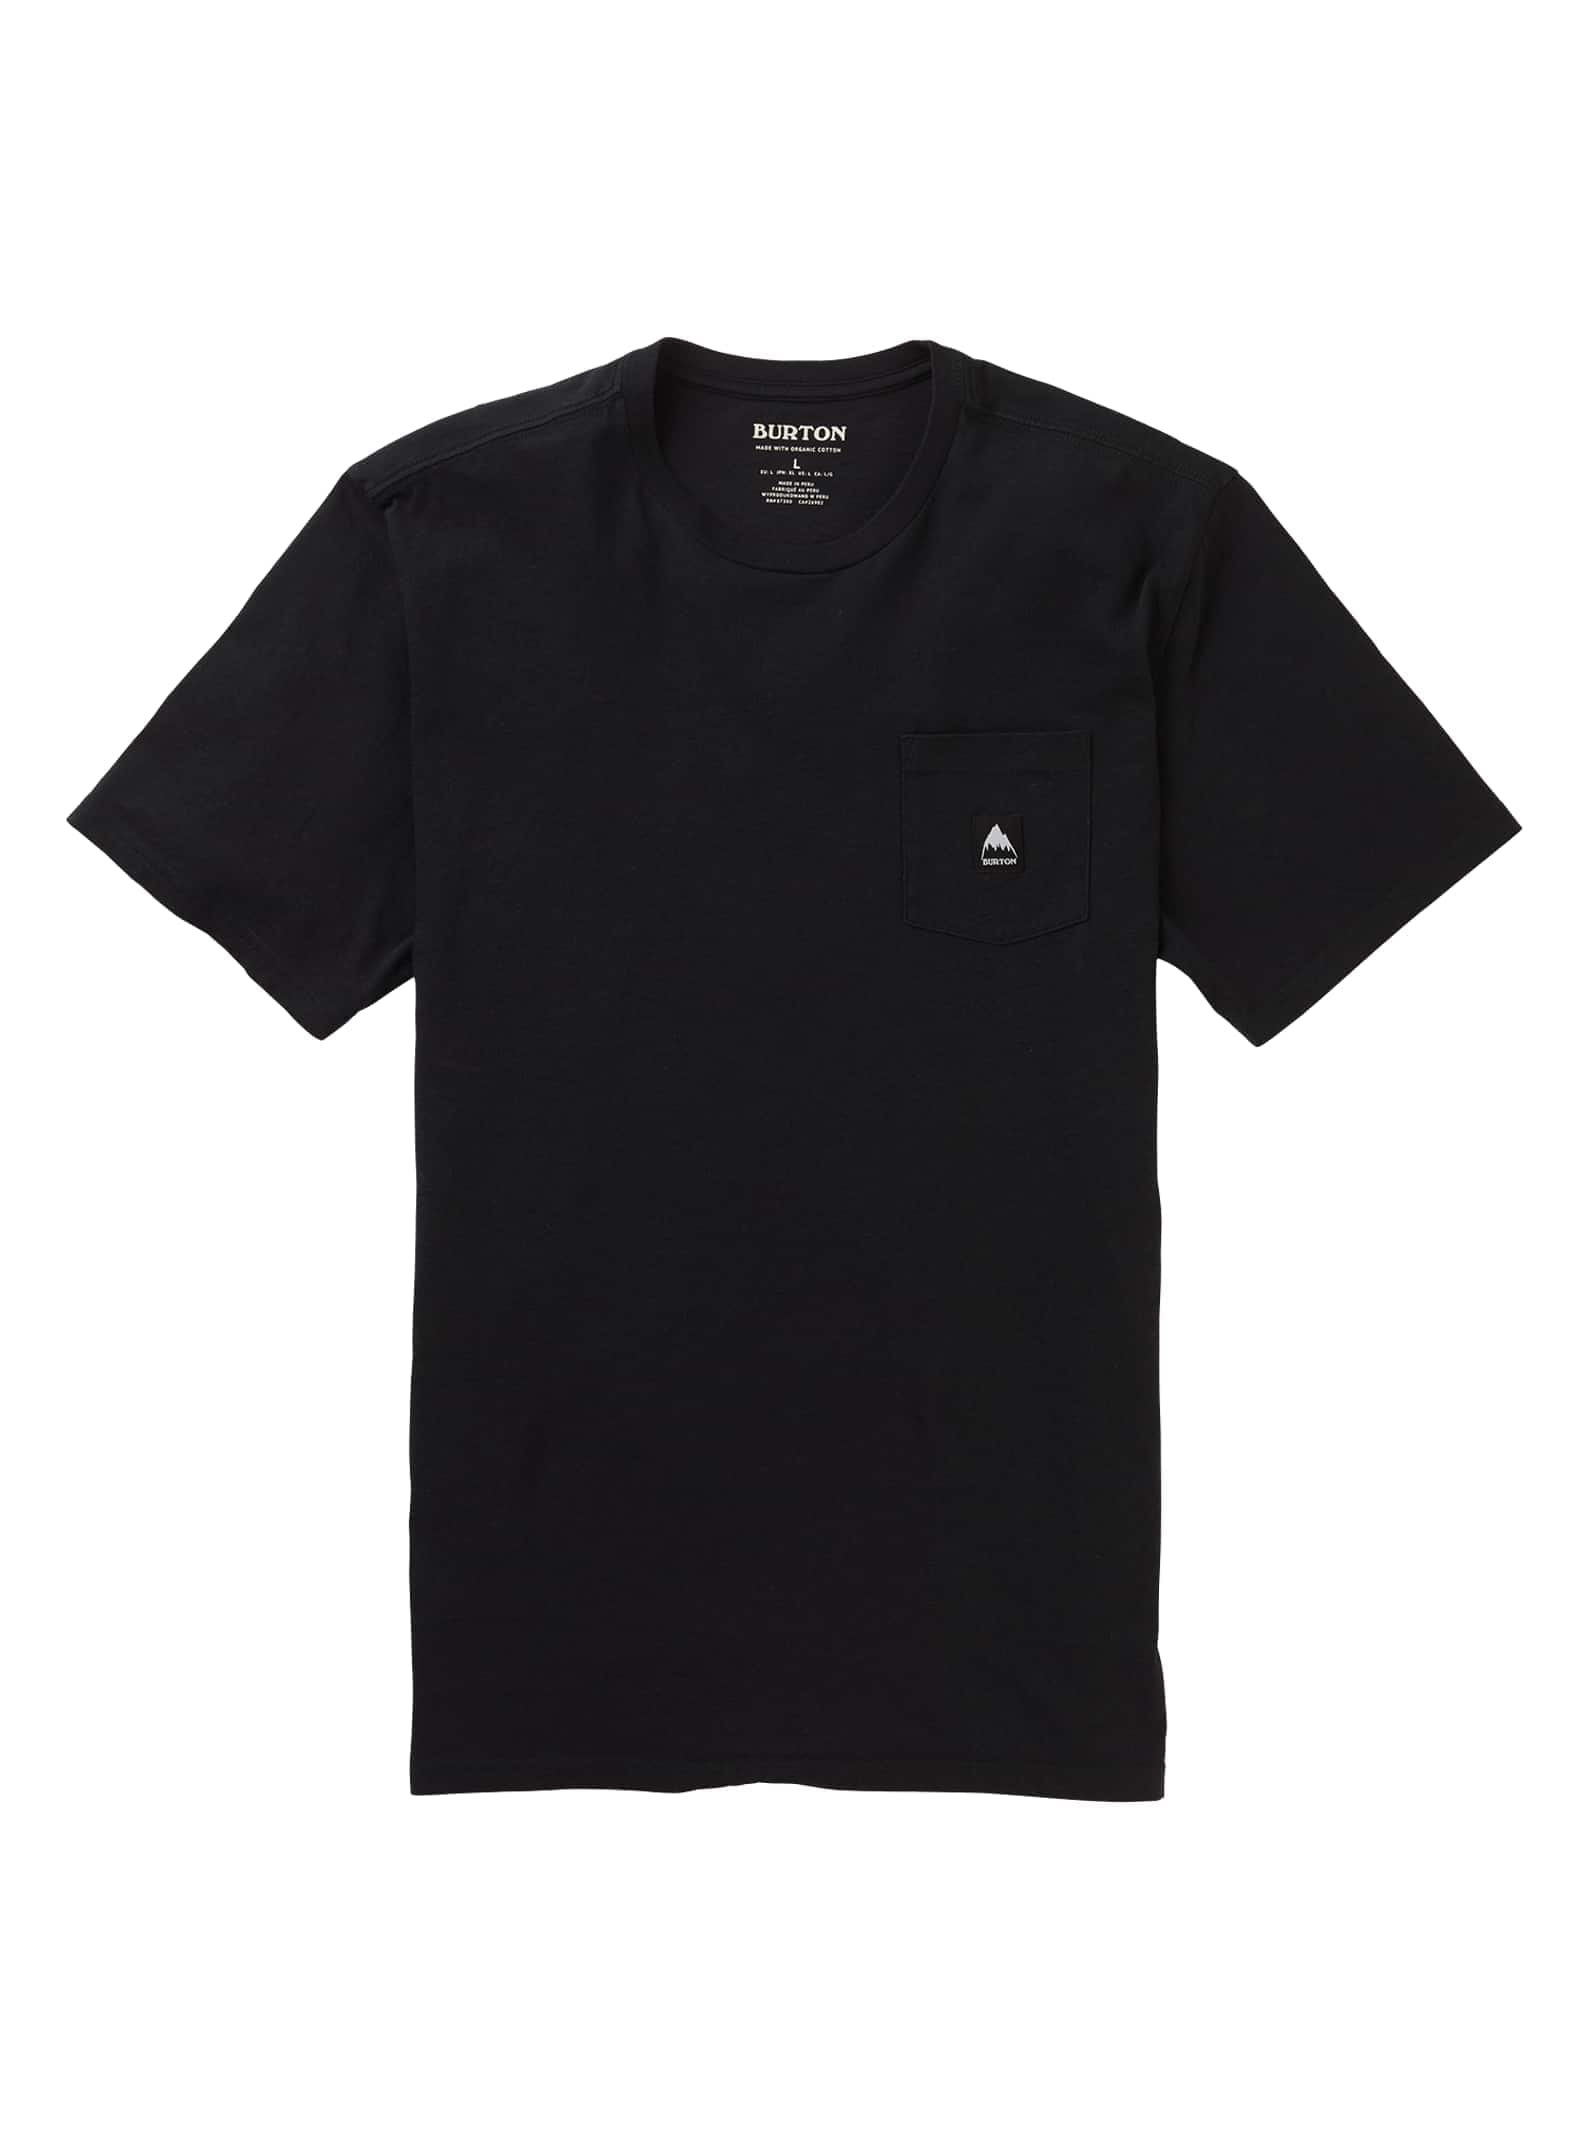 Burton Colfax Short Sleeve T-Shirt, True Black, M